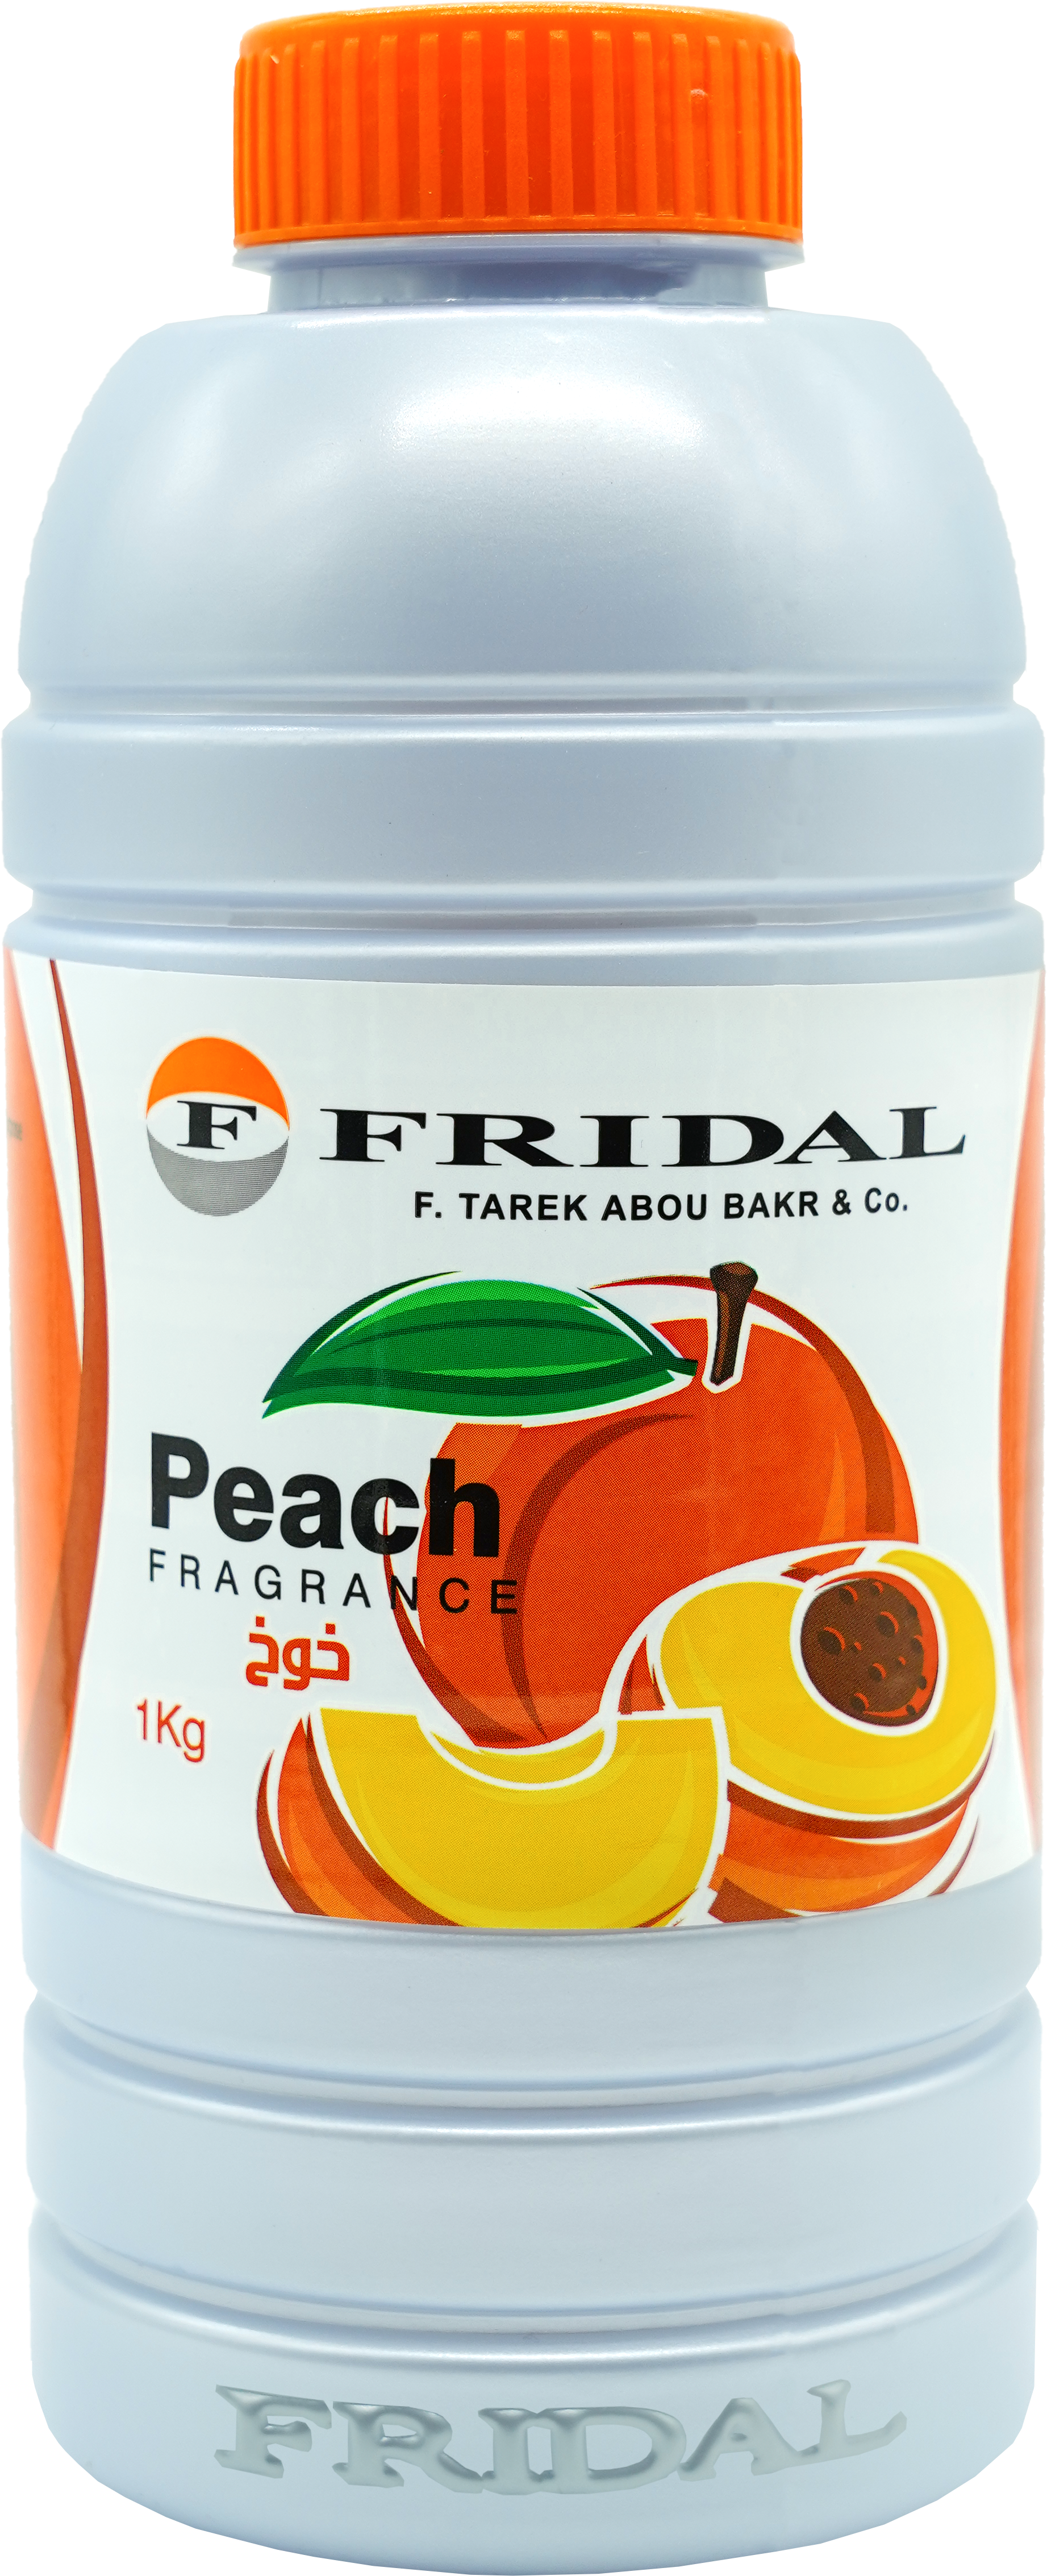 Multi-purpose usage Fragrance "Peach 1kg"